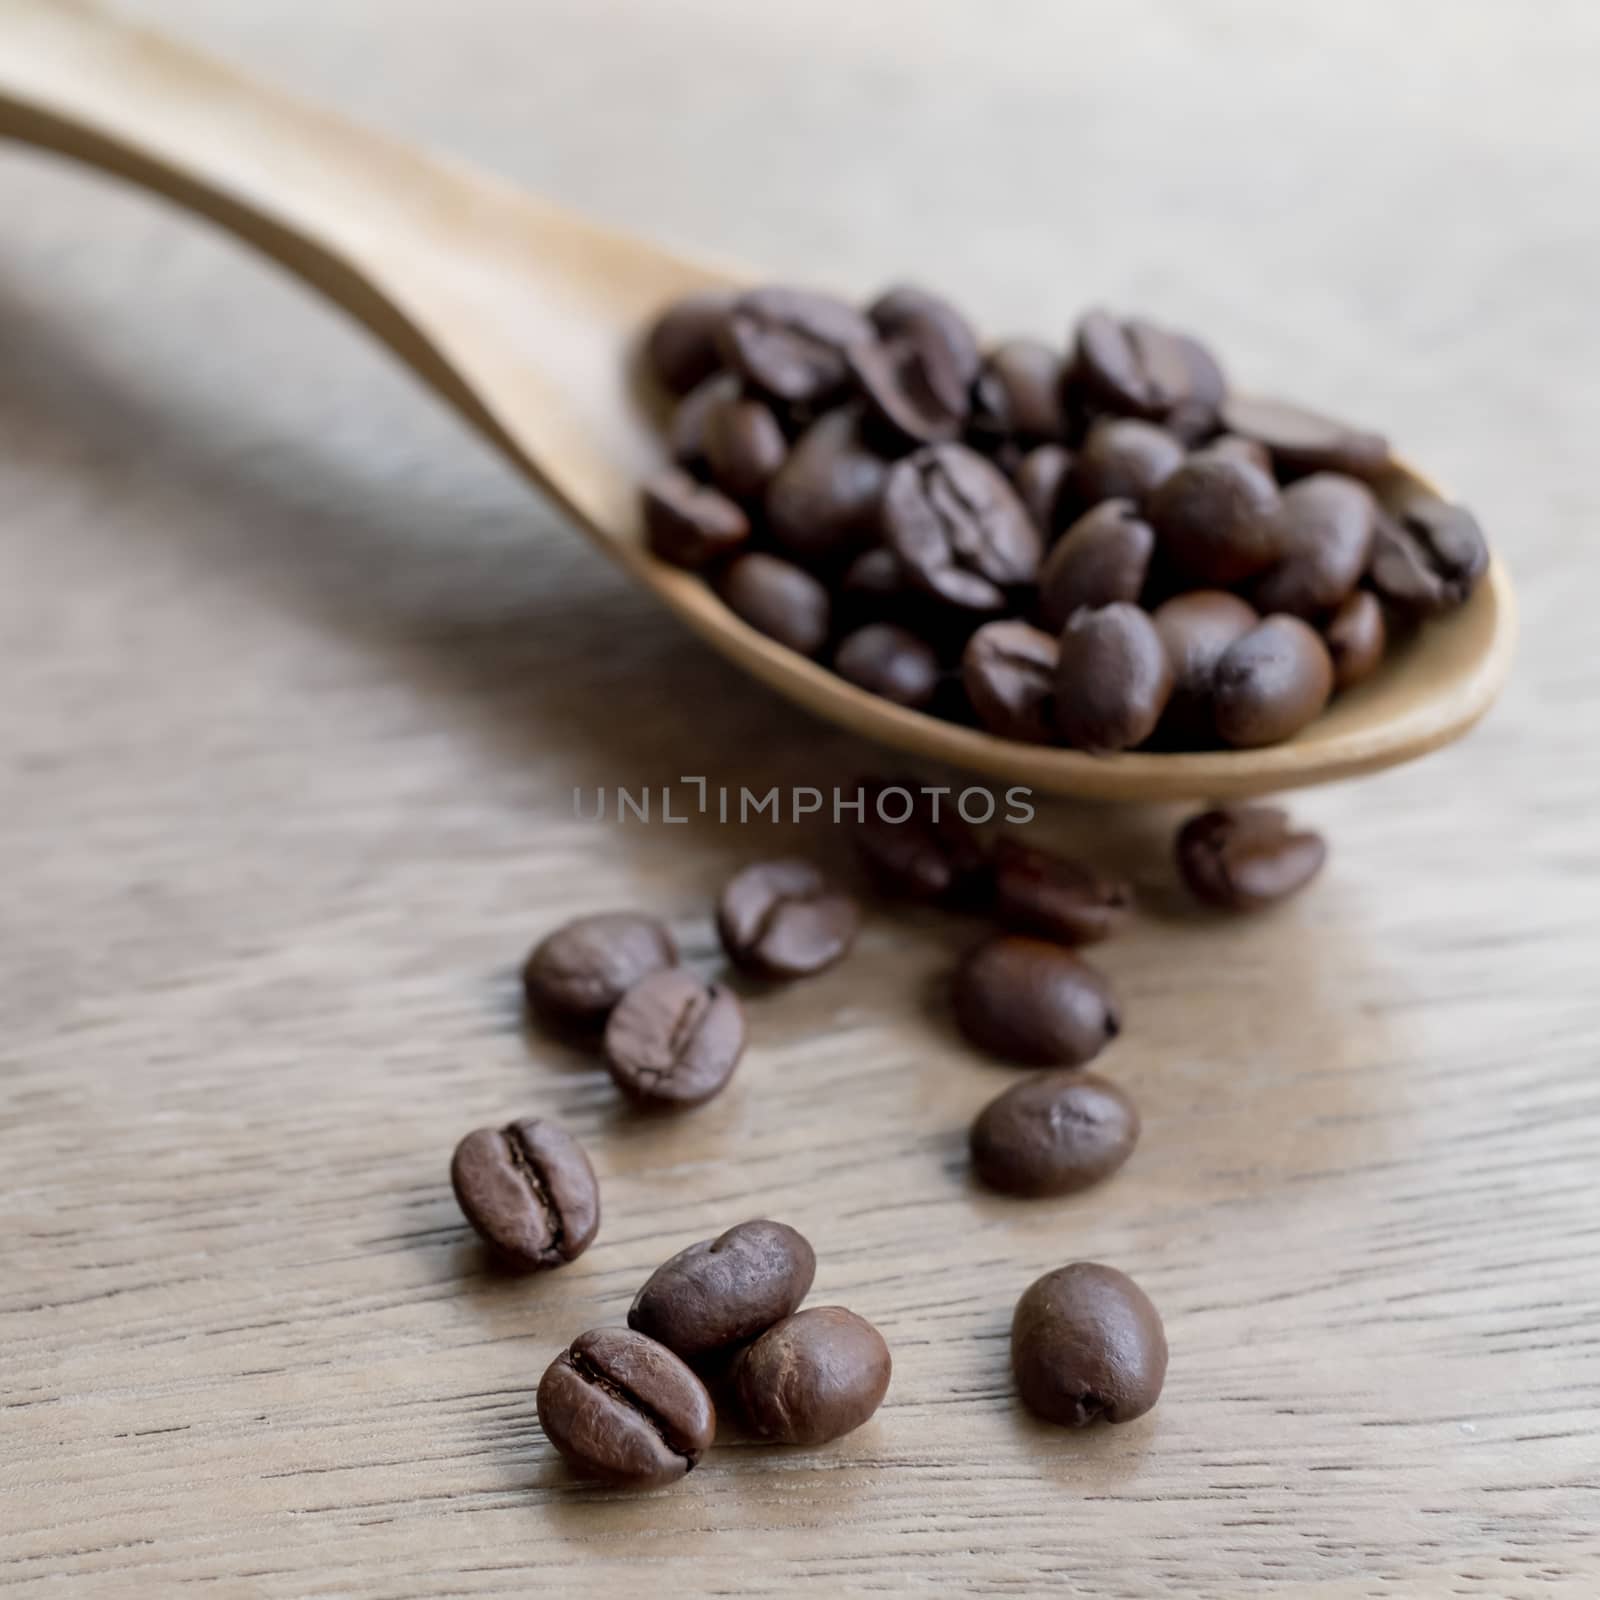 Coffee Bean scoop by wooden spoon by art9858